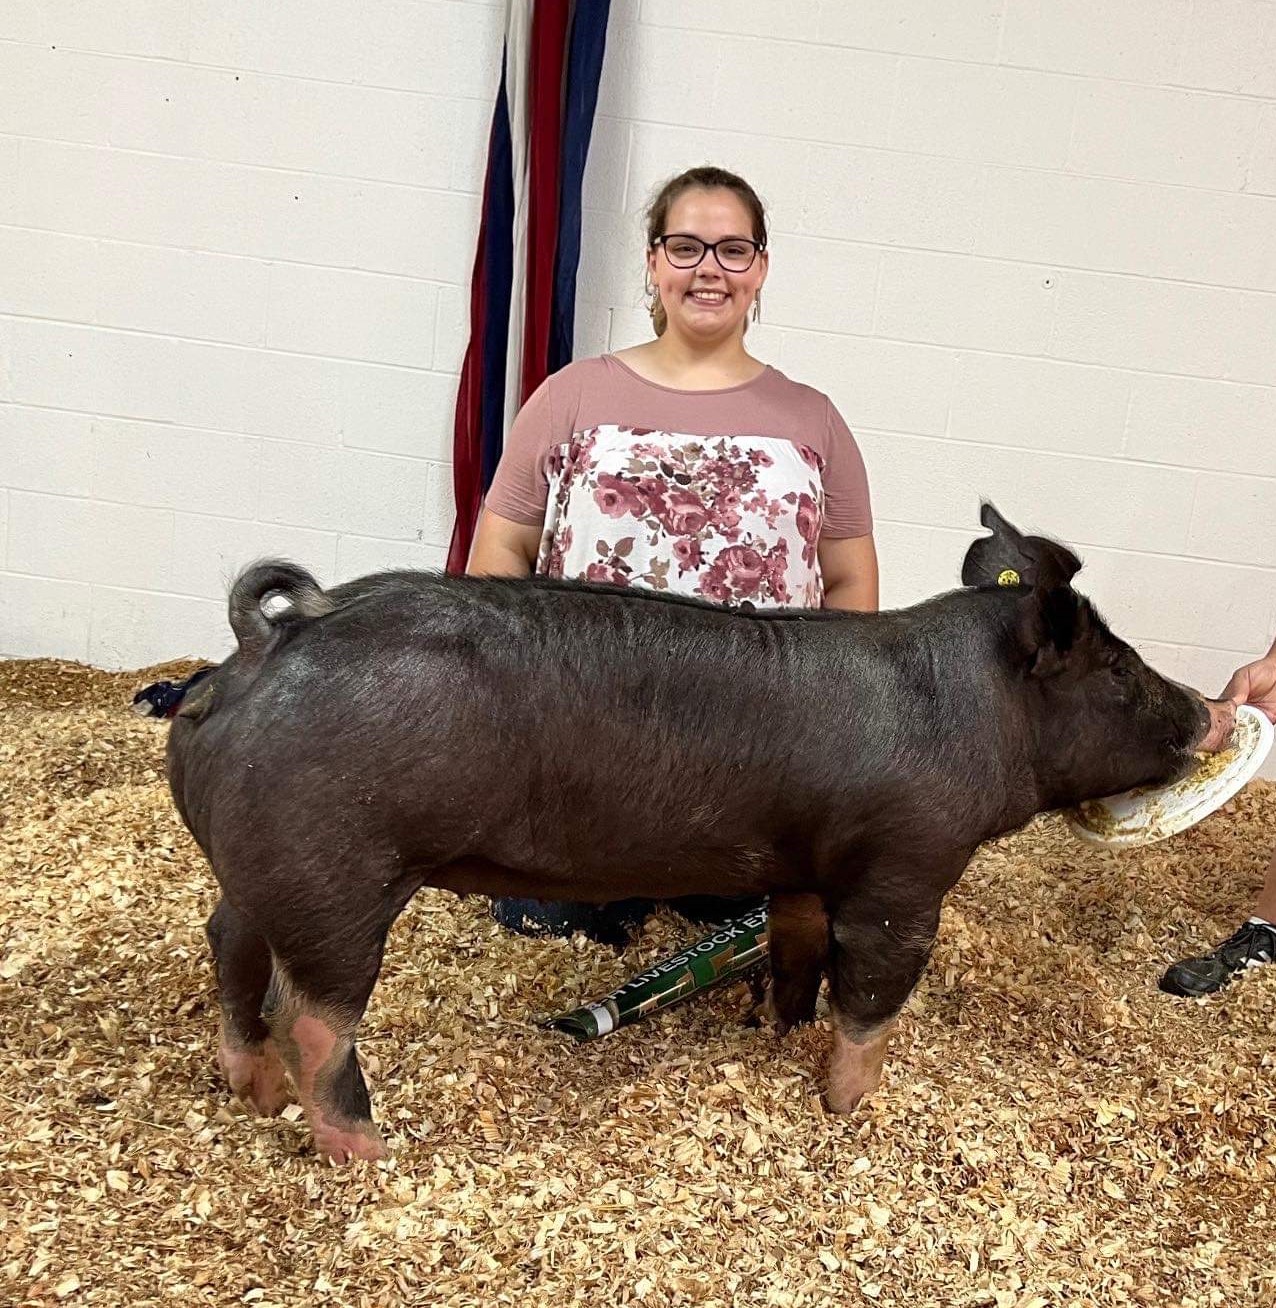 Emma Stevens
2022 Macon County Expo
Reserve Champion Market Hog